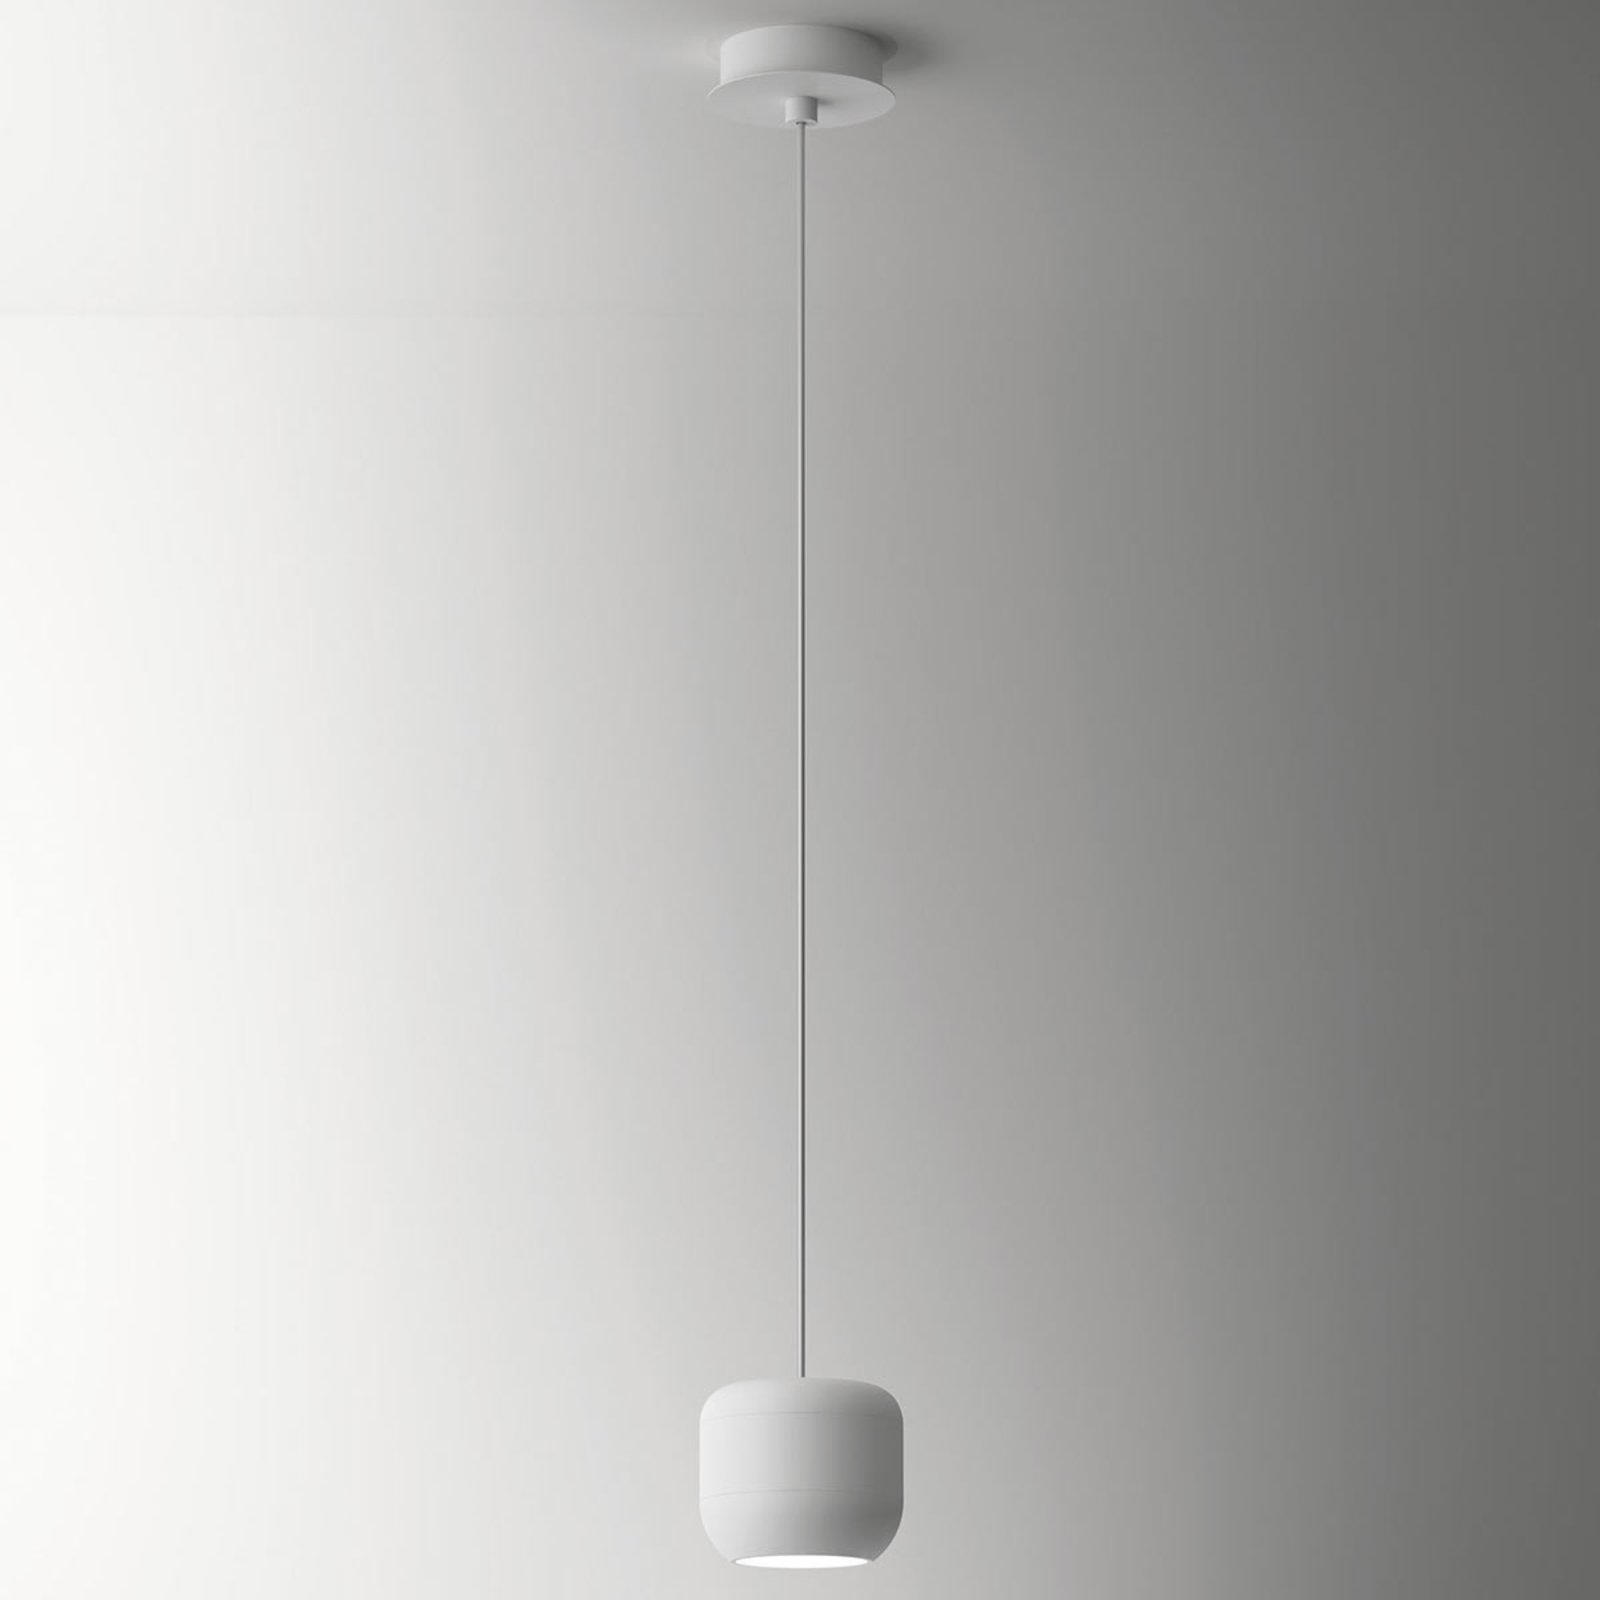 Axolight Urban LED hanglamp 16 cm wit